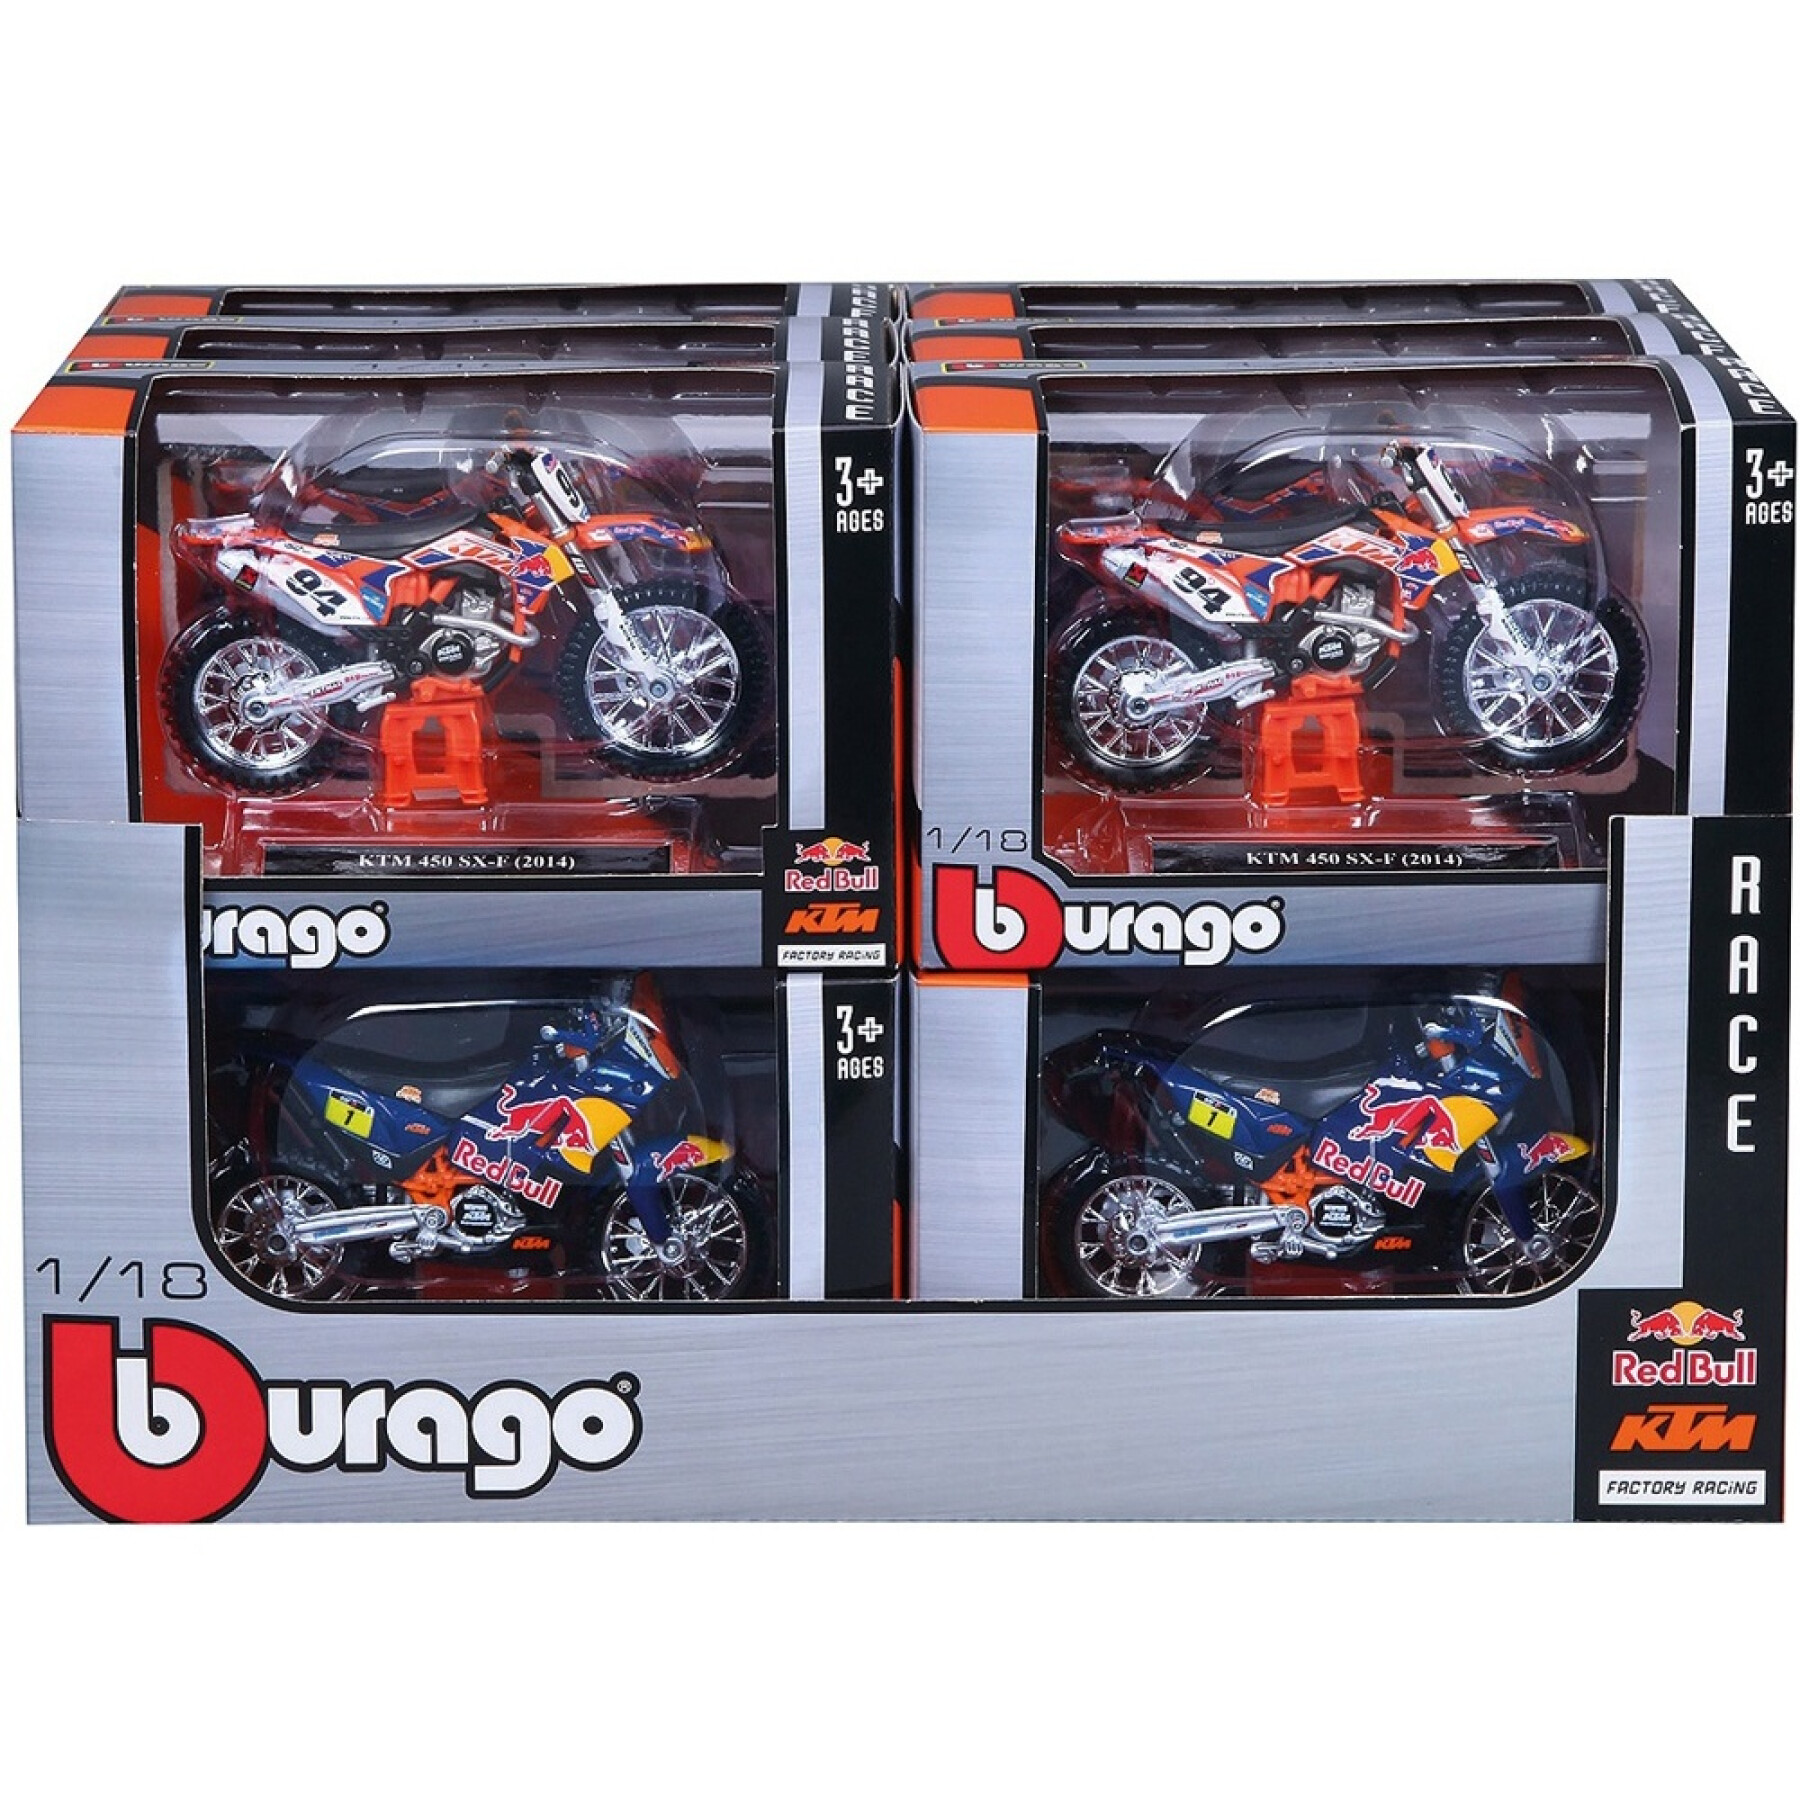 Motorcycle car games Burago Red Bull Ktm 1/18